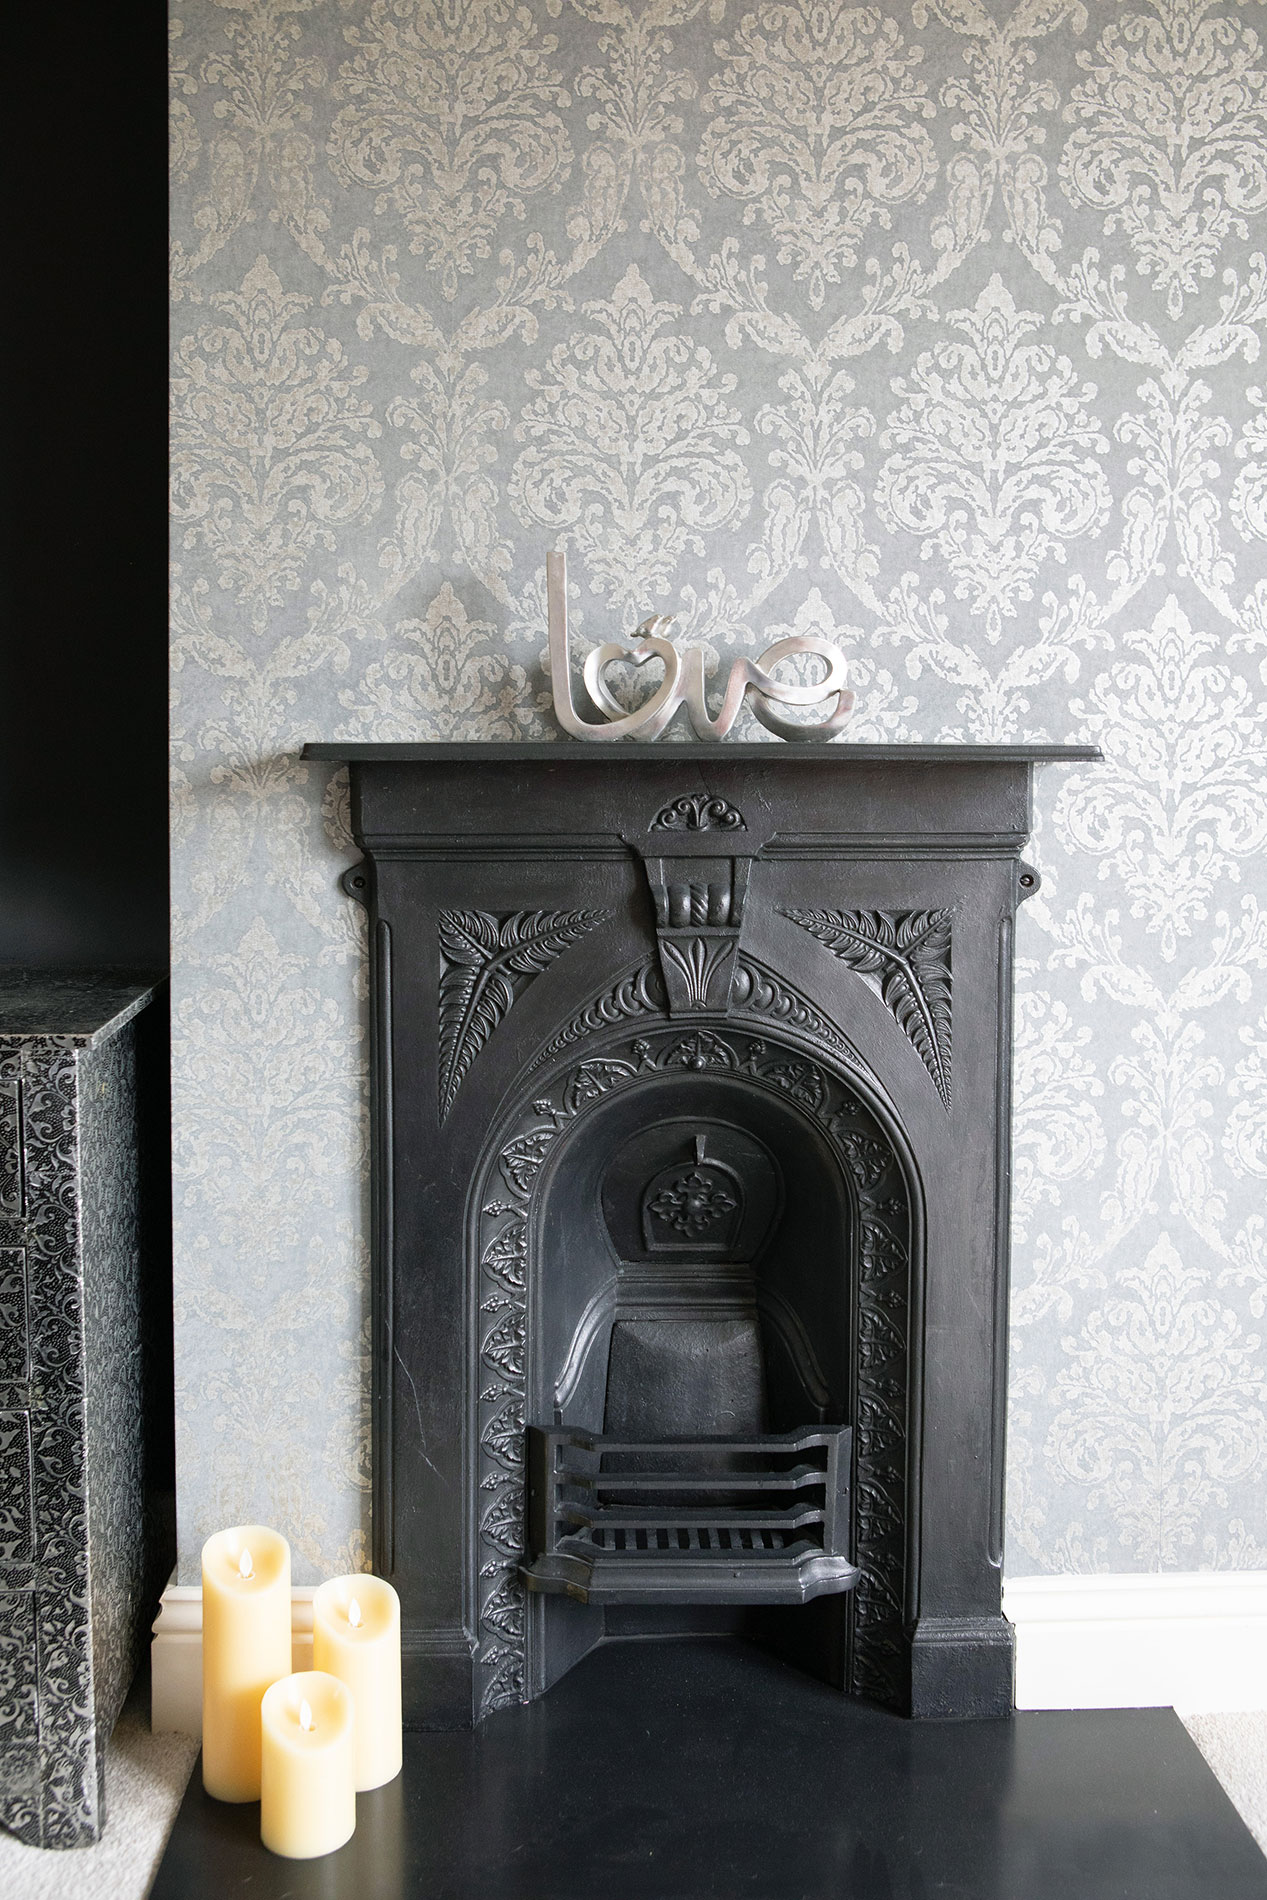 Feature Wallpaper & Fireplace, Shefford